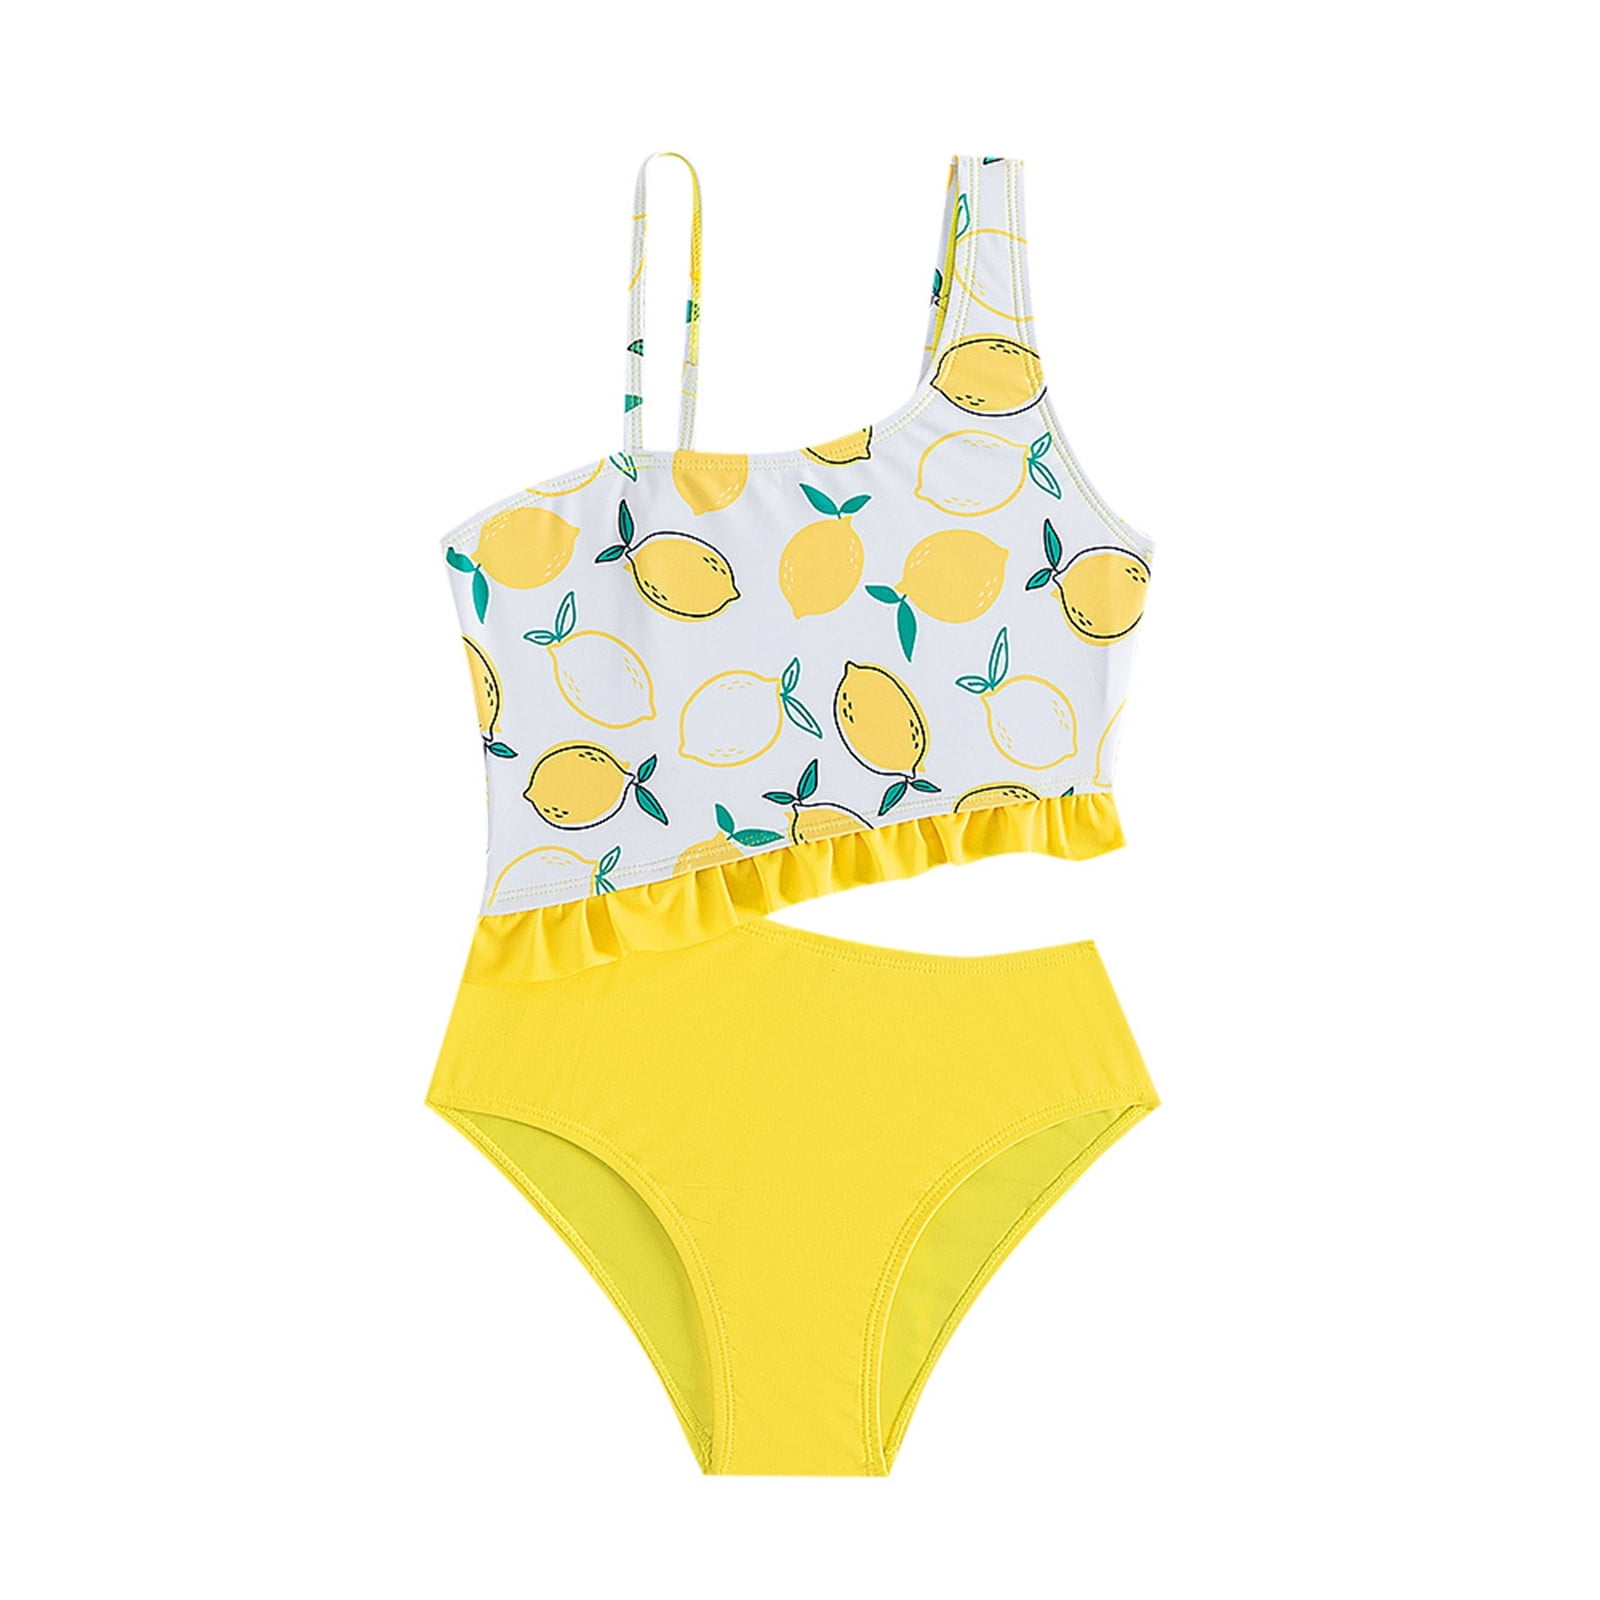 Cathalem Cute Swimwear for Girls Toddler Baby Girls Swimsuit Bikini One ...